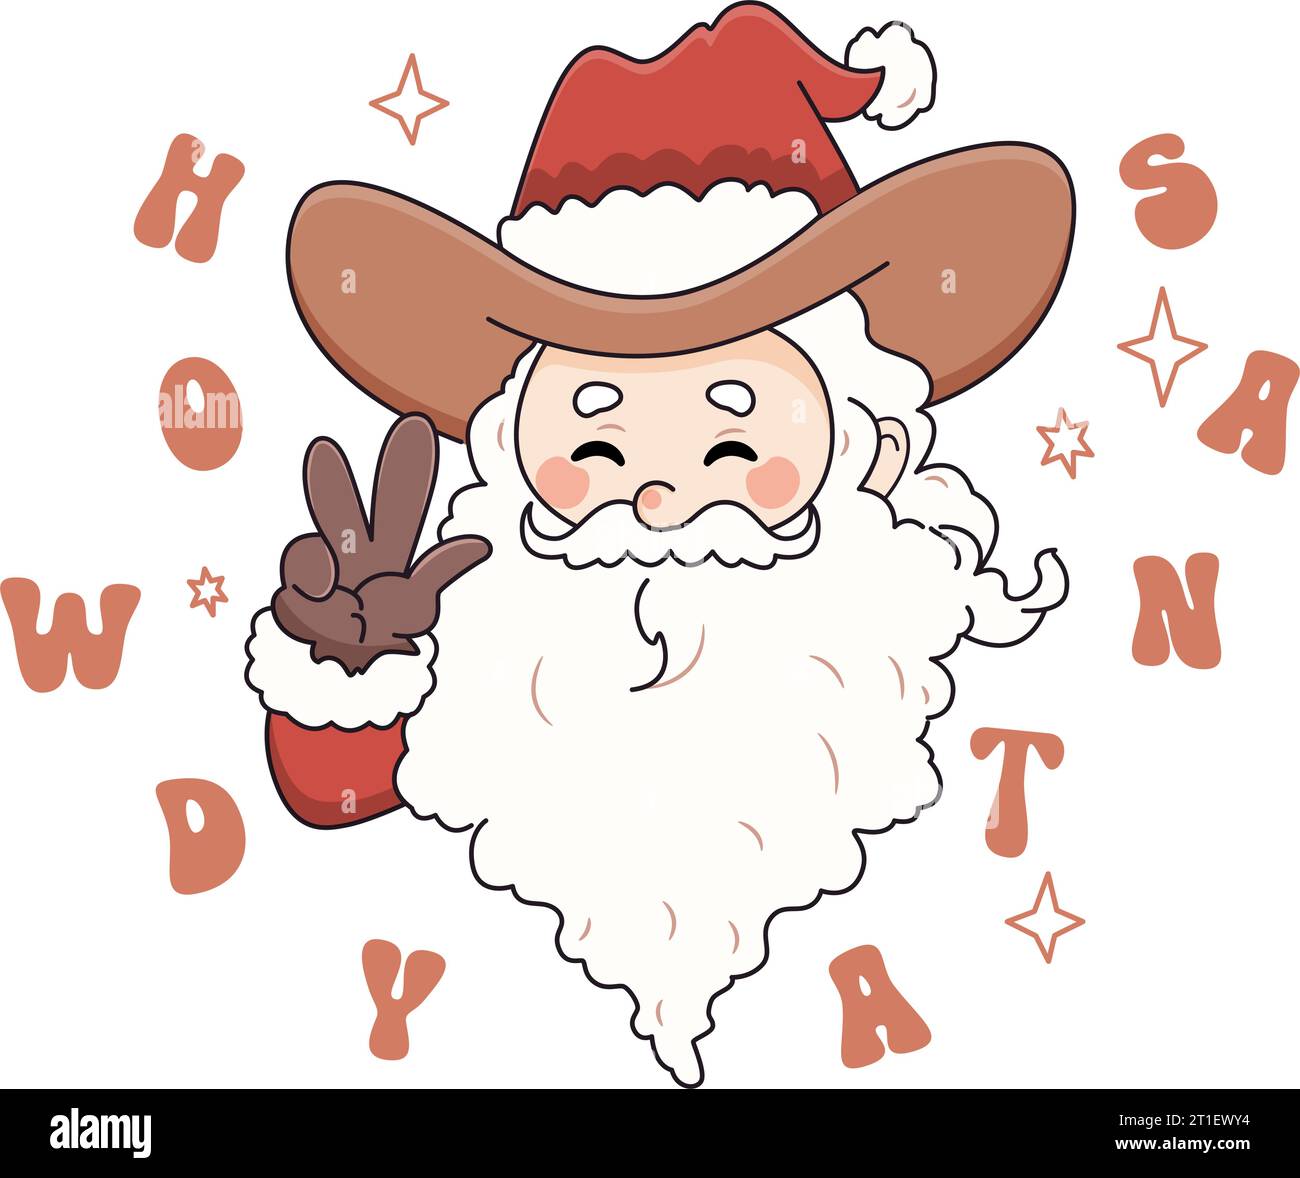 Der heilige Cowboy Santa Claus. Groovige Santa-Vektor-Illustration für T-Shirt-Design. Stock Vektor